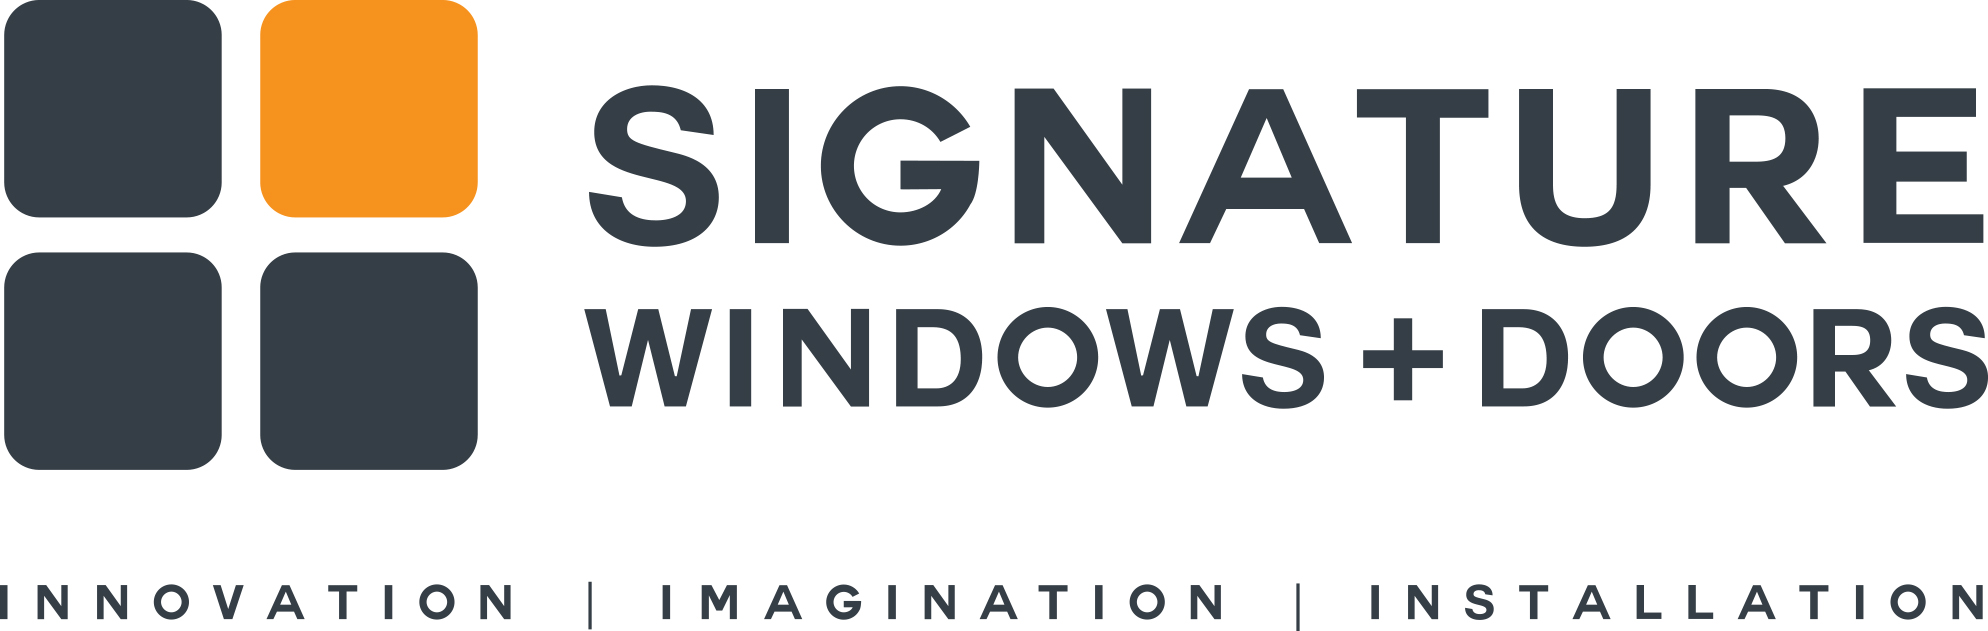 Signature Windows Job Postings